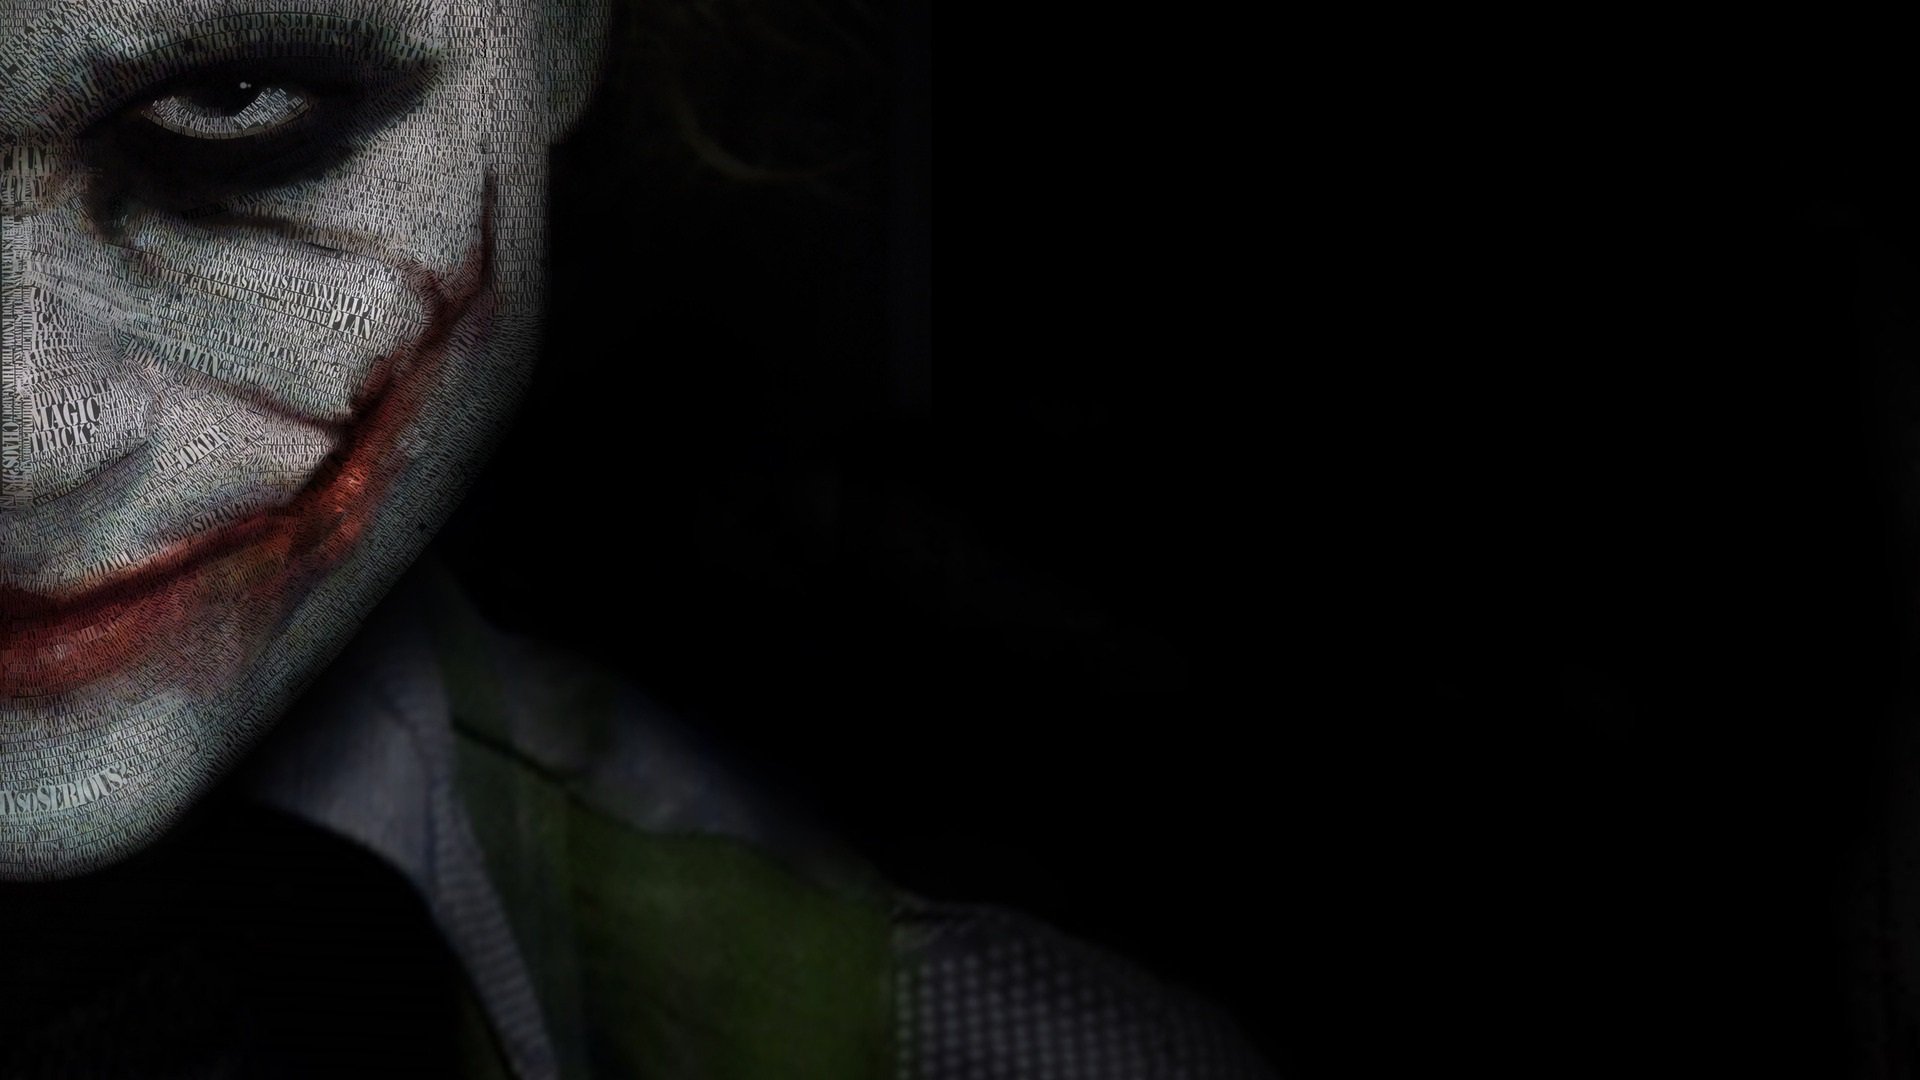 Wallpapers   The Joker [Full HD] 1080p   Taringa 1920x1080